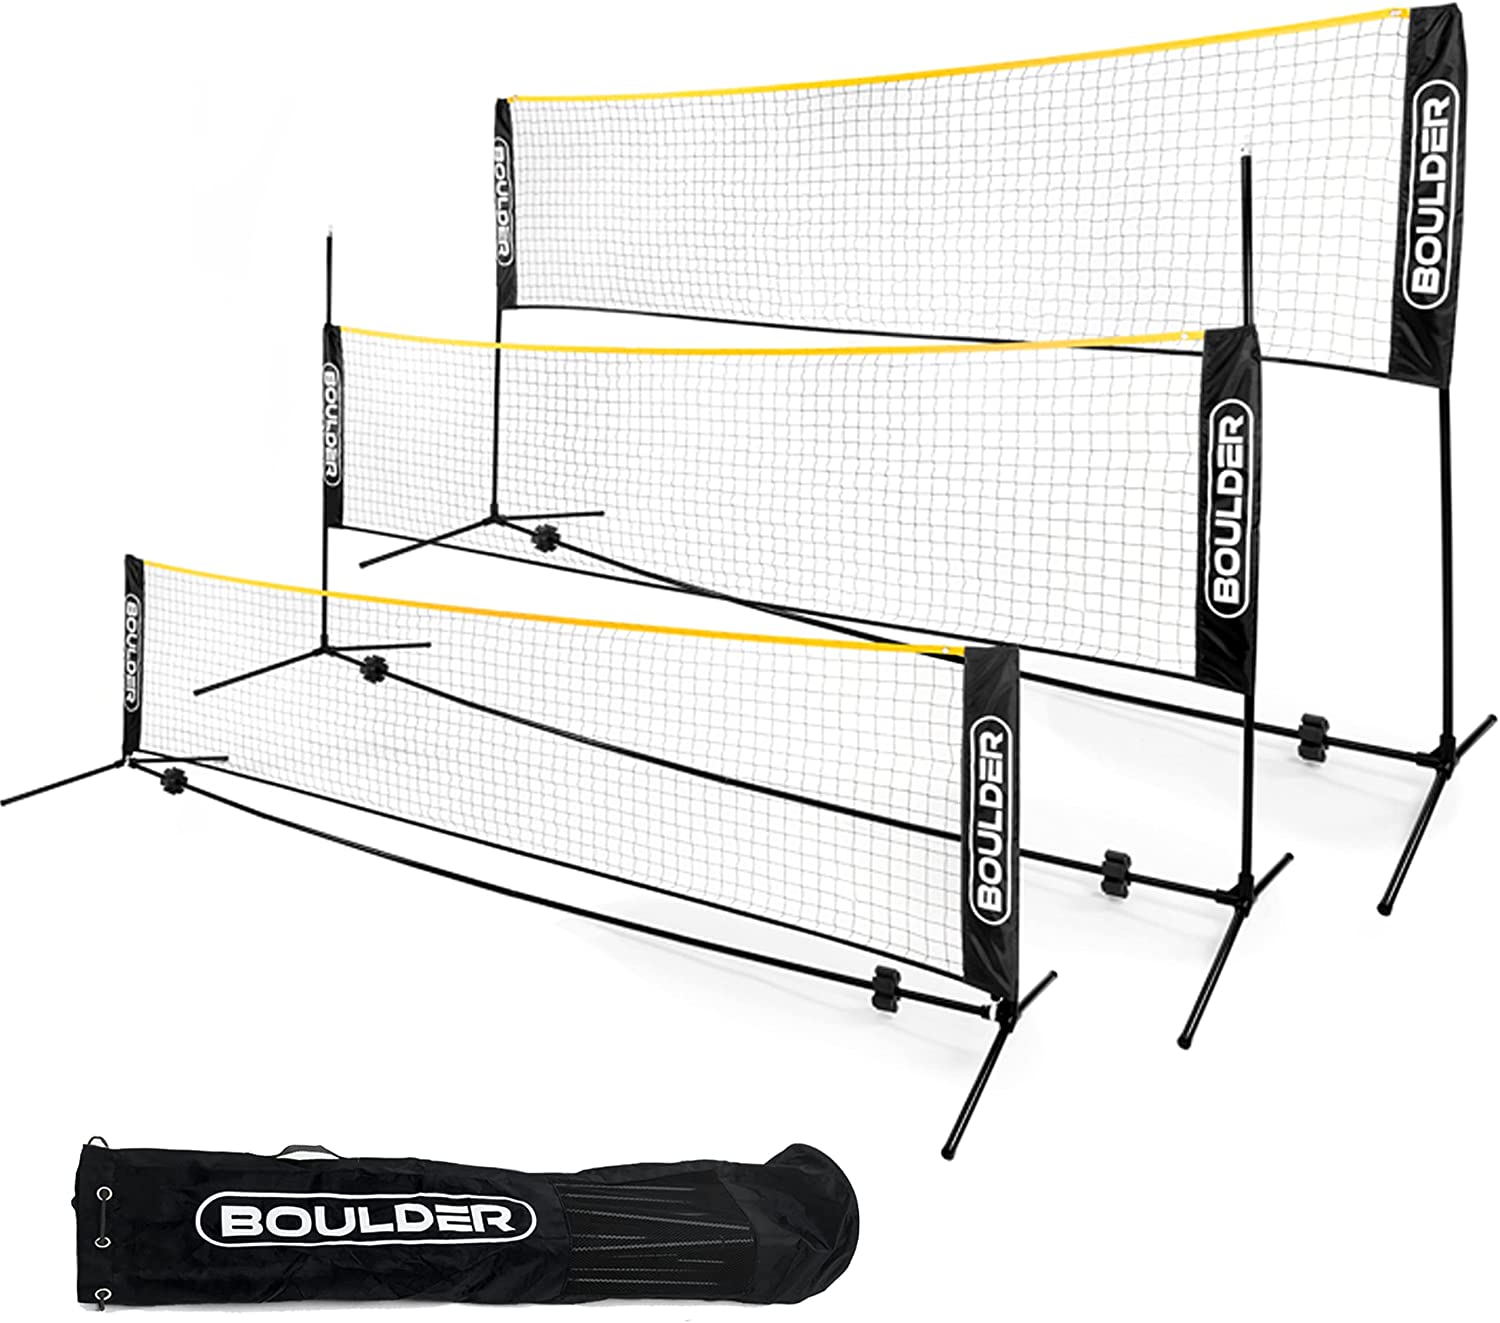 Photo 1 of Boulder Portable Badminton Net Set  for Tennis Soccer Tennis Pickleball Kids Volleyball  Easy Setup Nylon Sports Net with Poles BlackYellow 1 net only